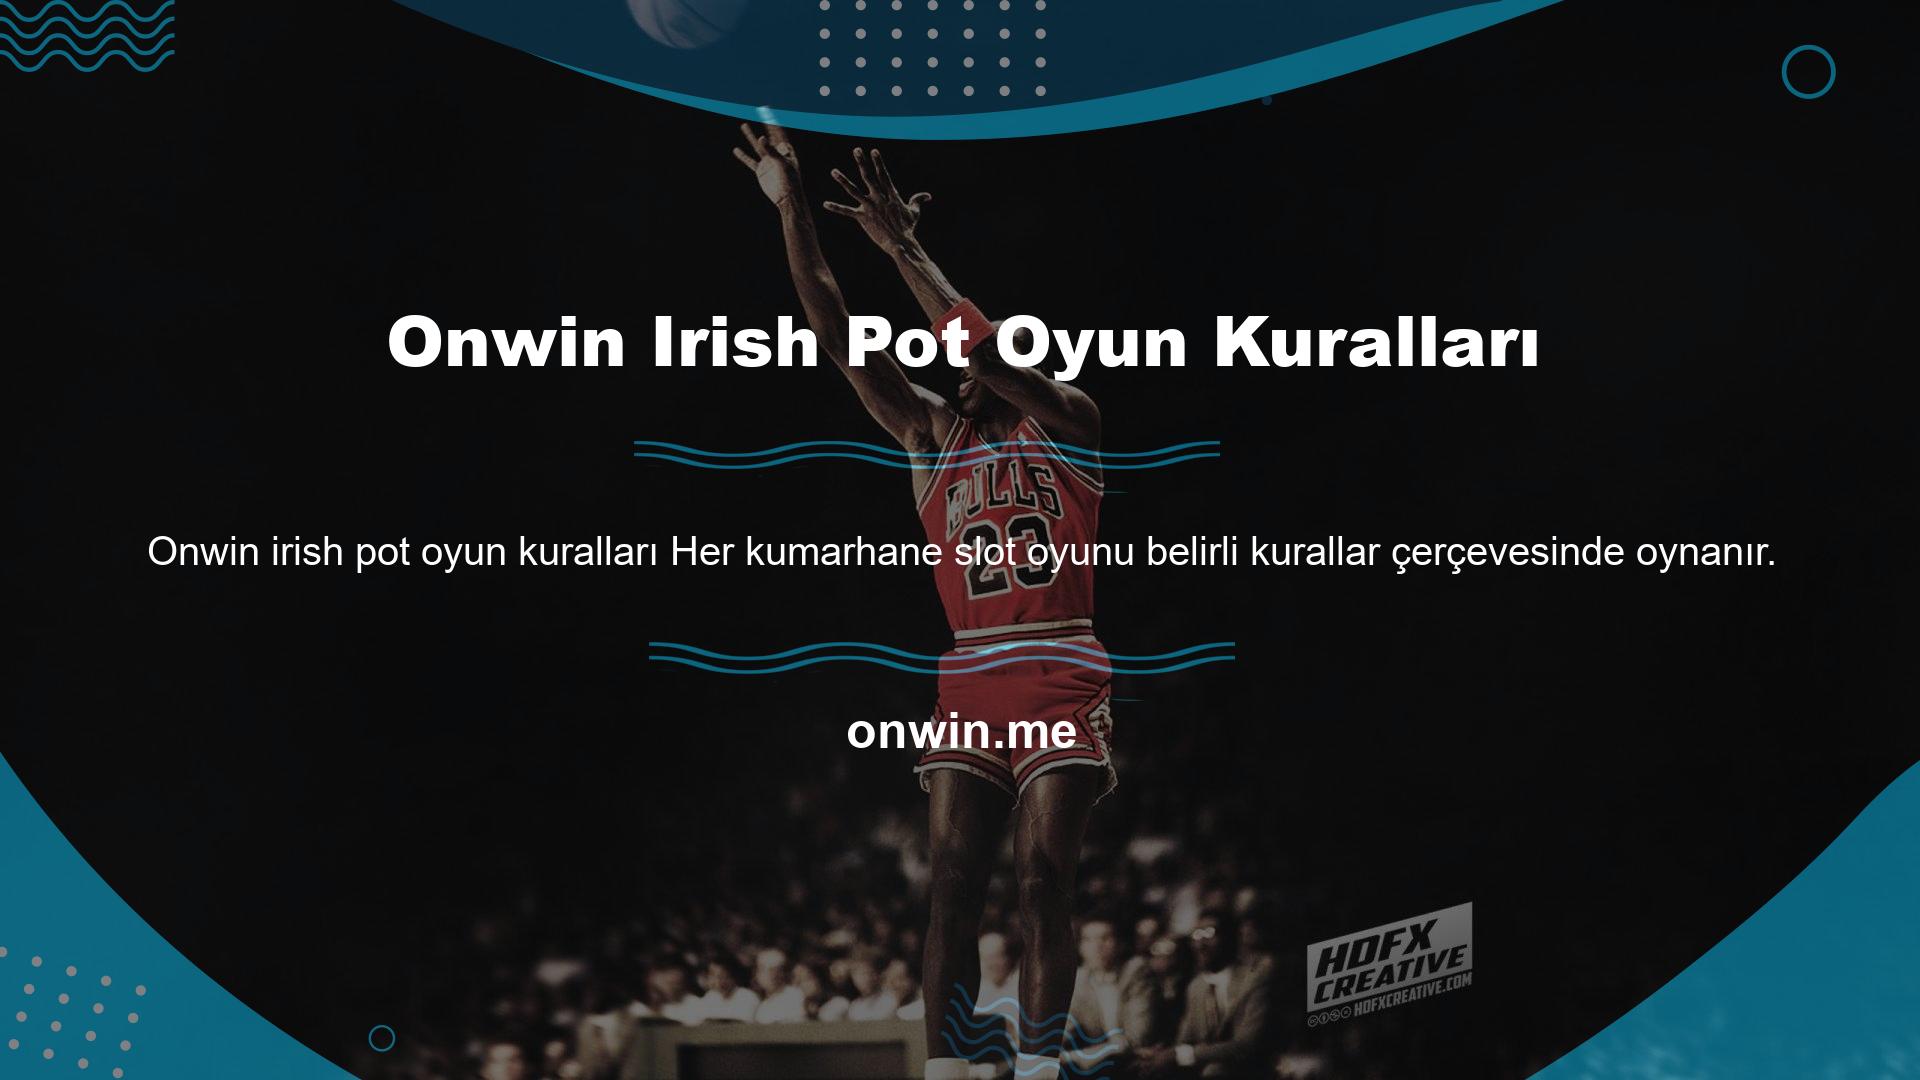 Onwin Irish Pot Oyun Kuralları